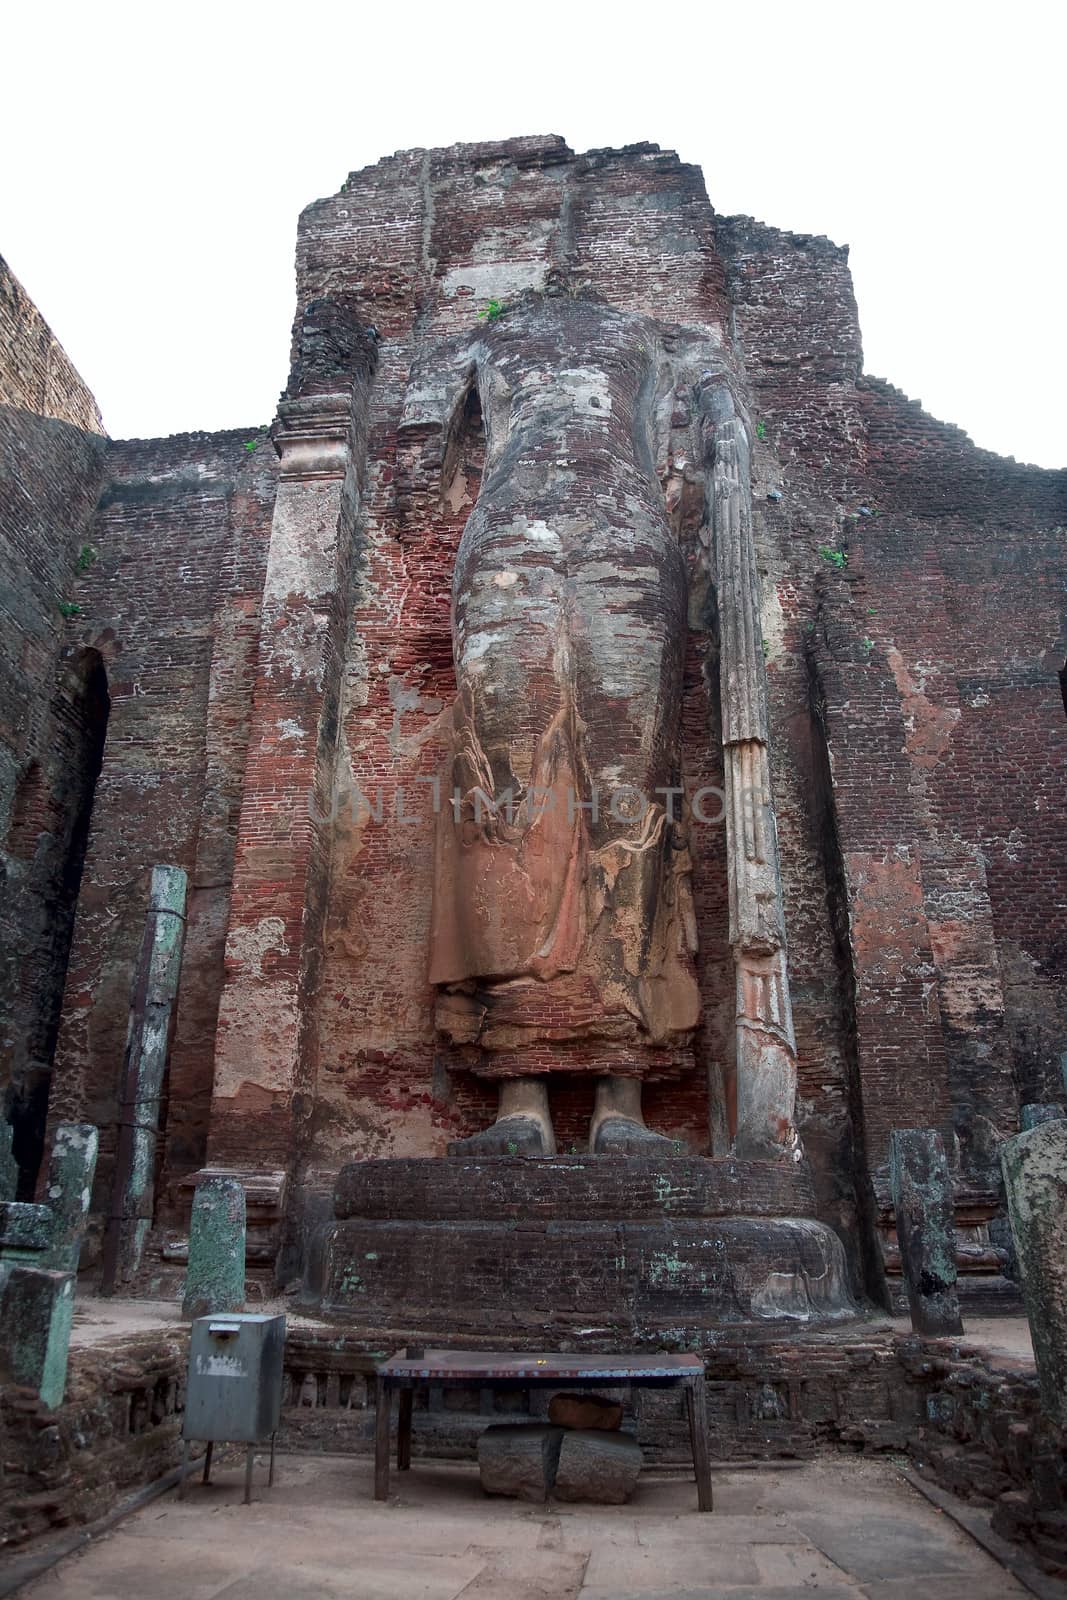 The ruined standing Buddha statue with app. 8m height, Polonnaruwa (ancient Sri Lanka's capital), Sri Lanka